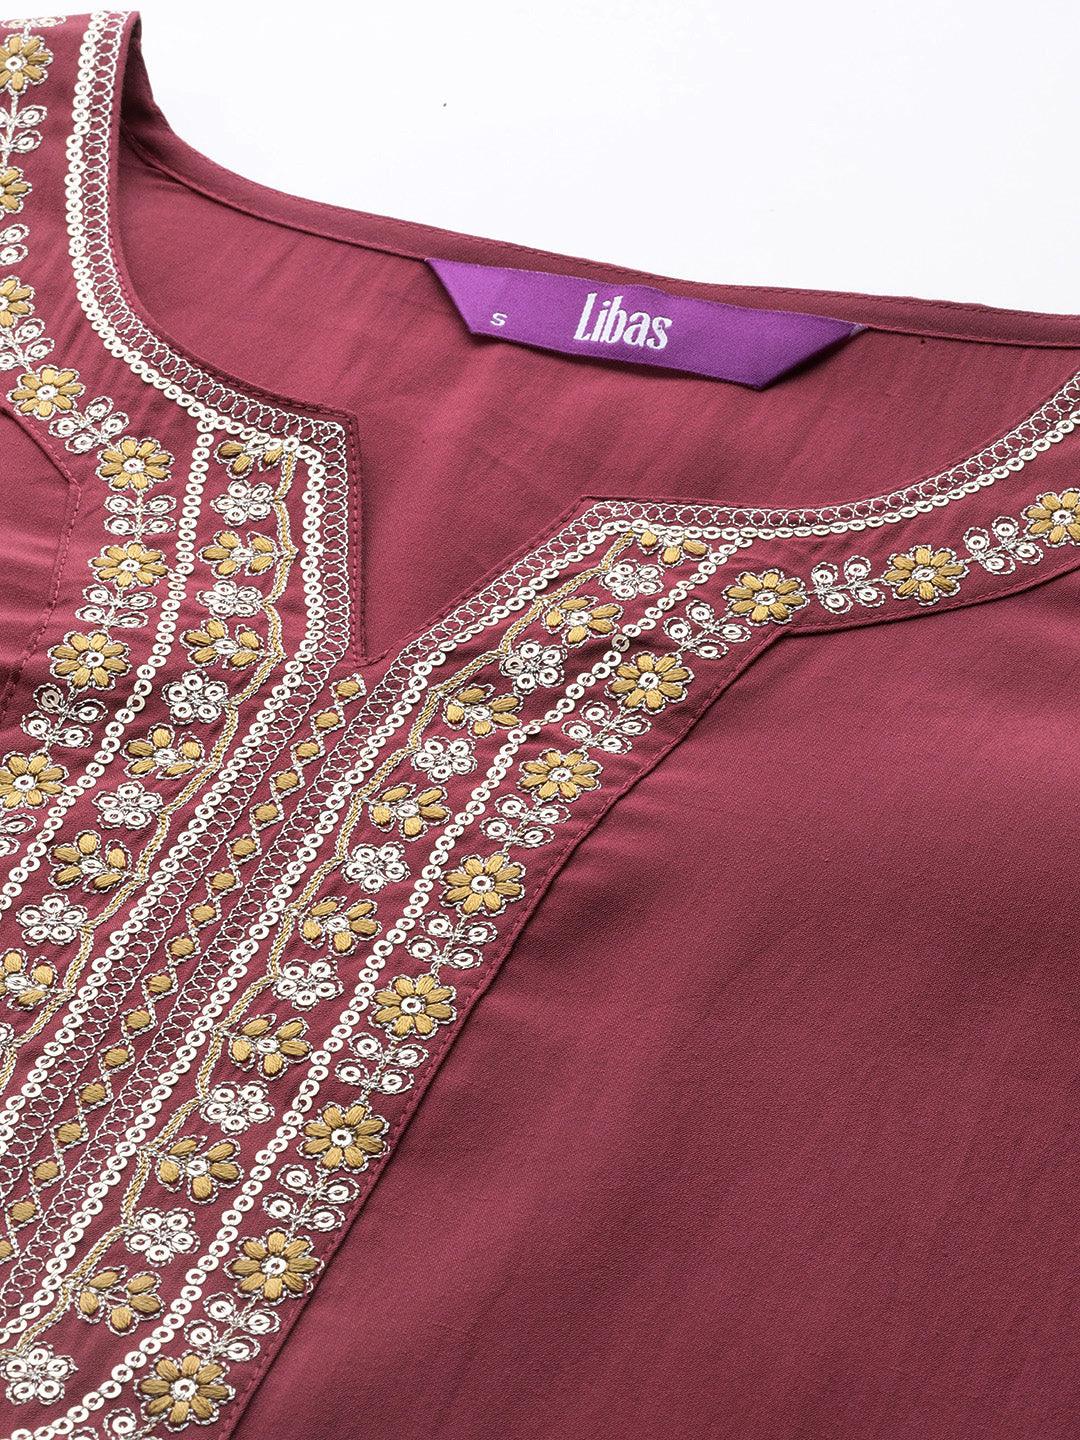 Mauve Yoke Design Silk Blend Straight Suit With Dupatta